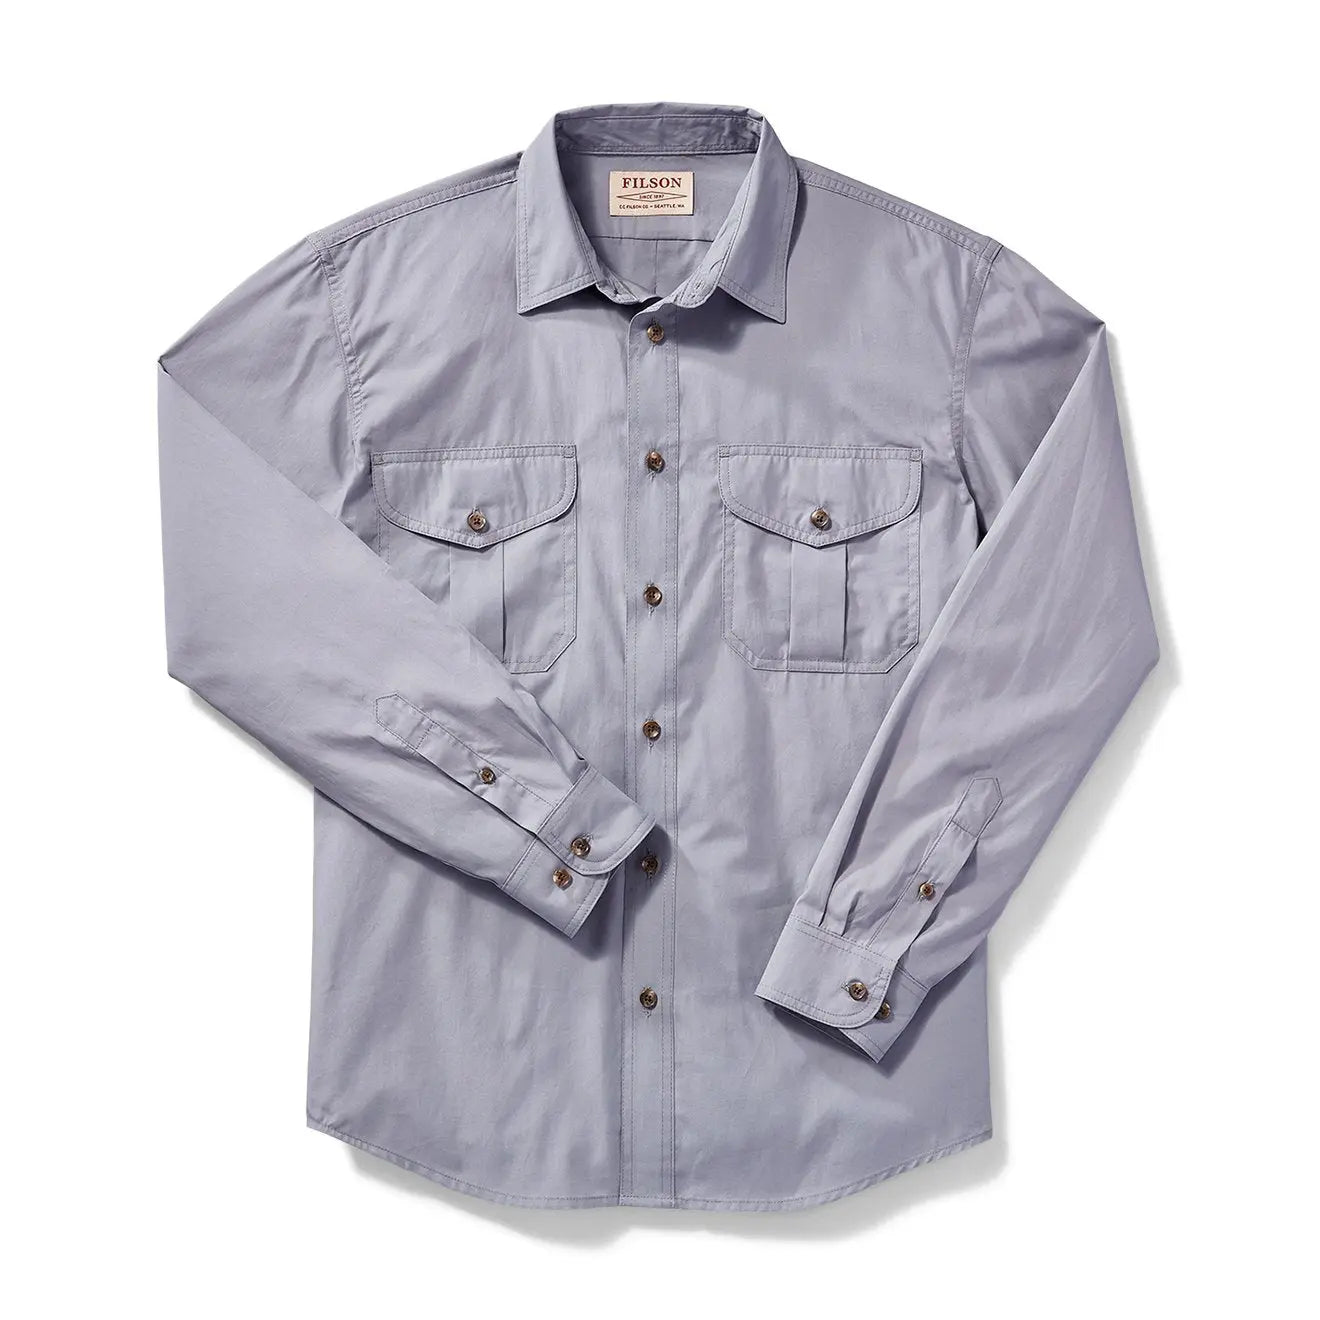 Filson Feather Cloth Shirt Smoke Blue | Yards Store Menswear